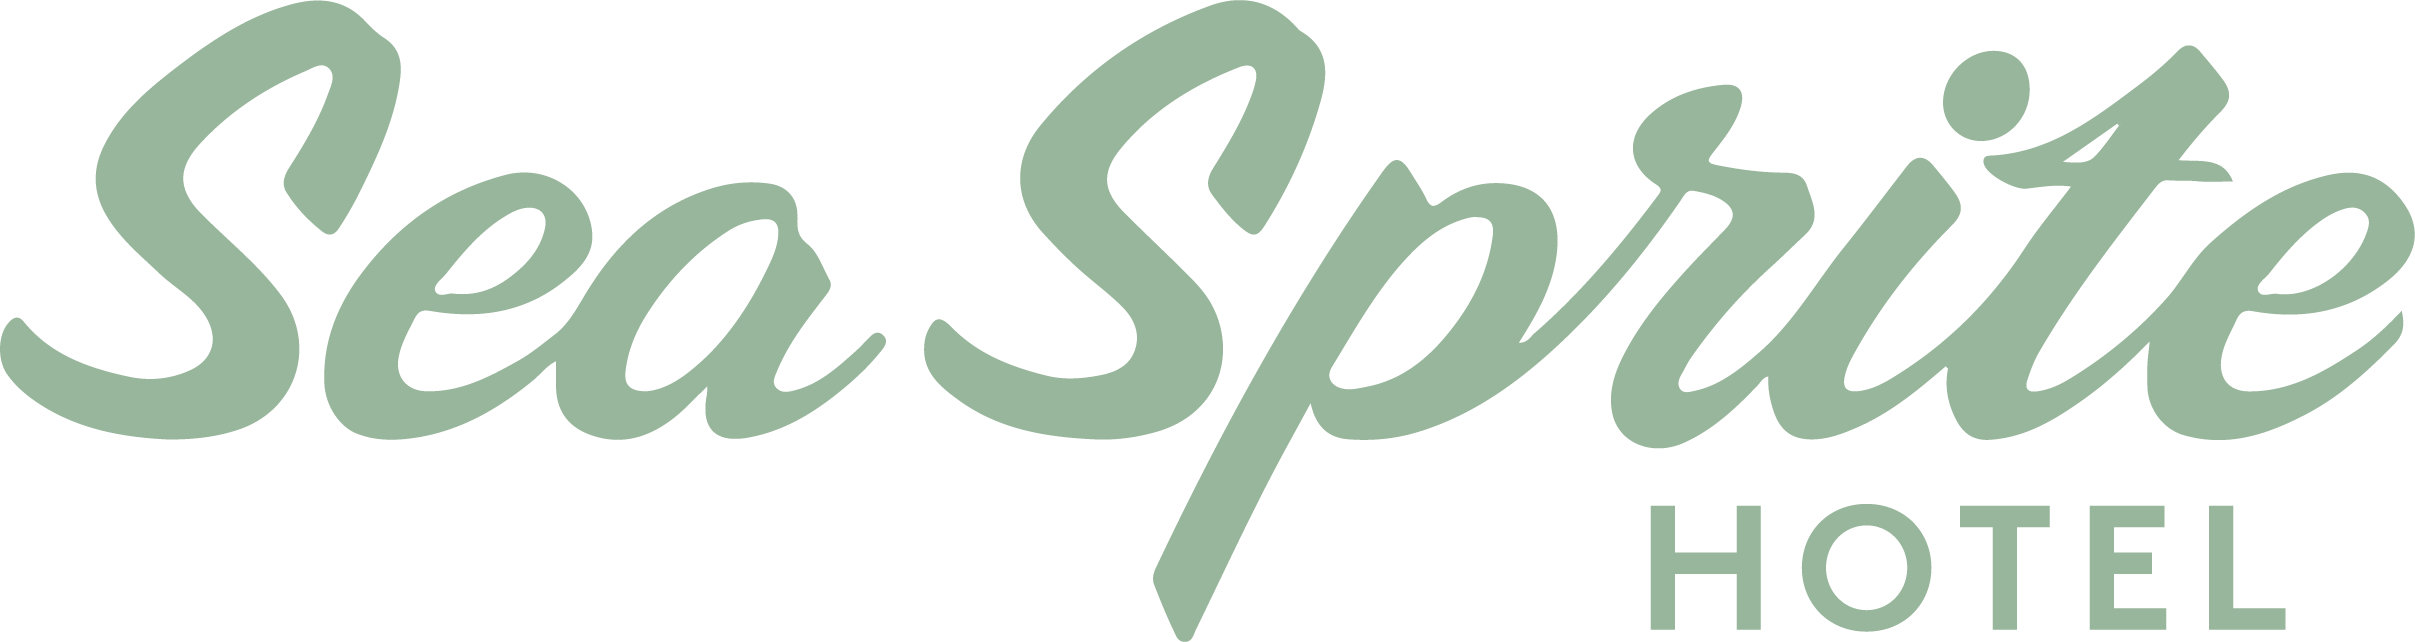 Sea Sprite Hotel logo